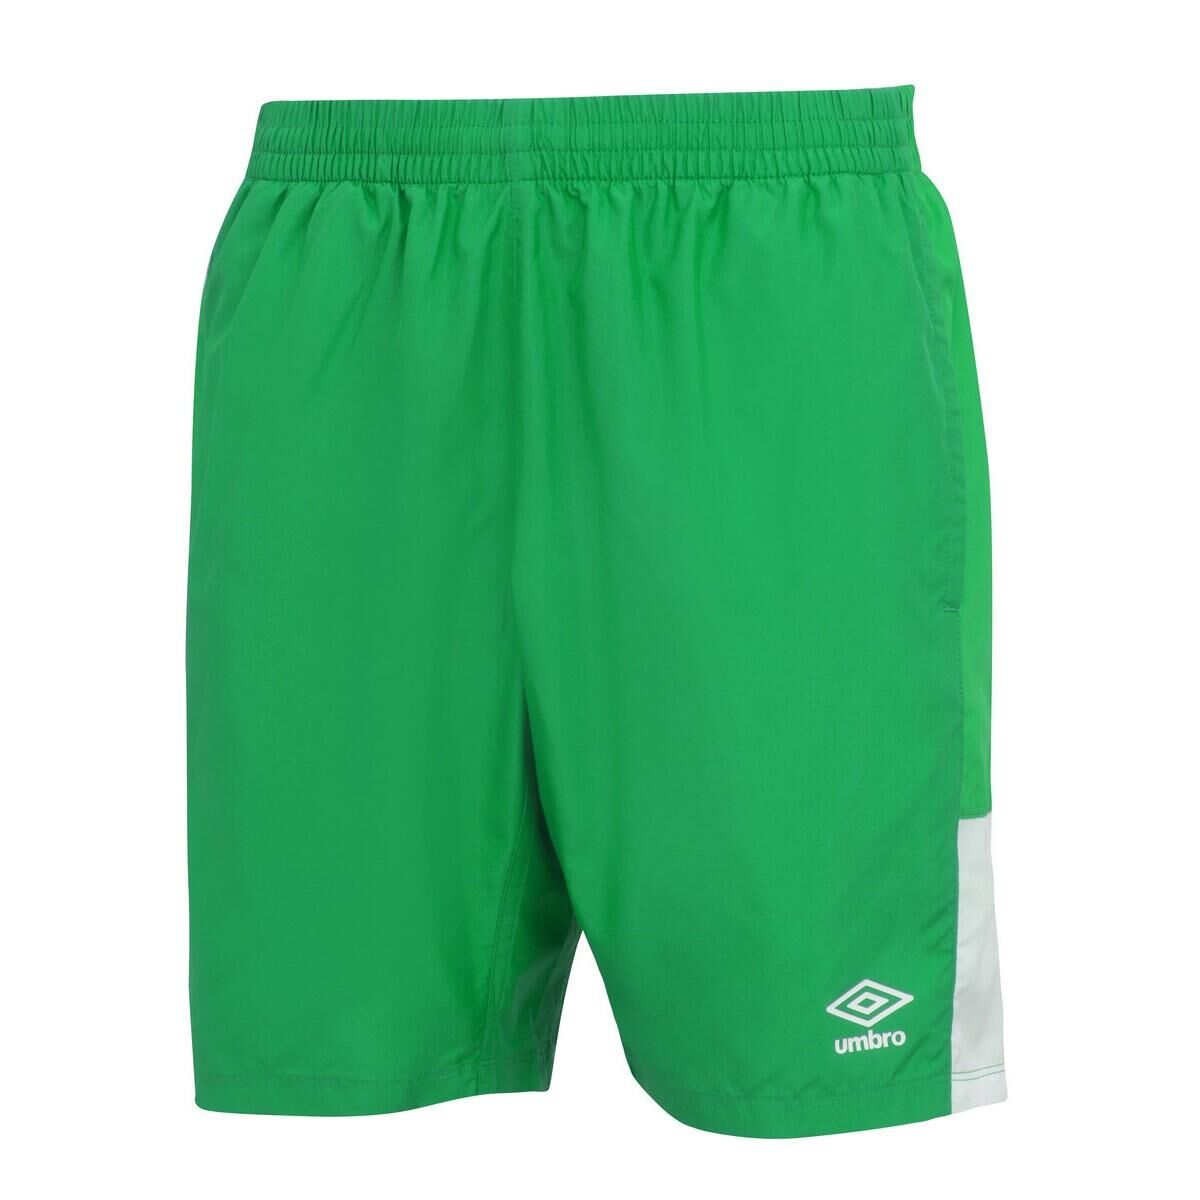 UMBRO Mens Training Rugby Shorts (Verdant Green/Emerald/White)